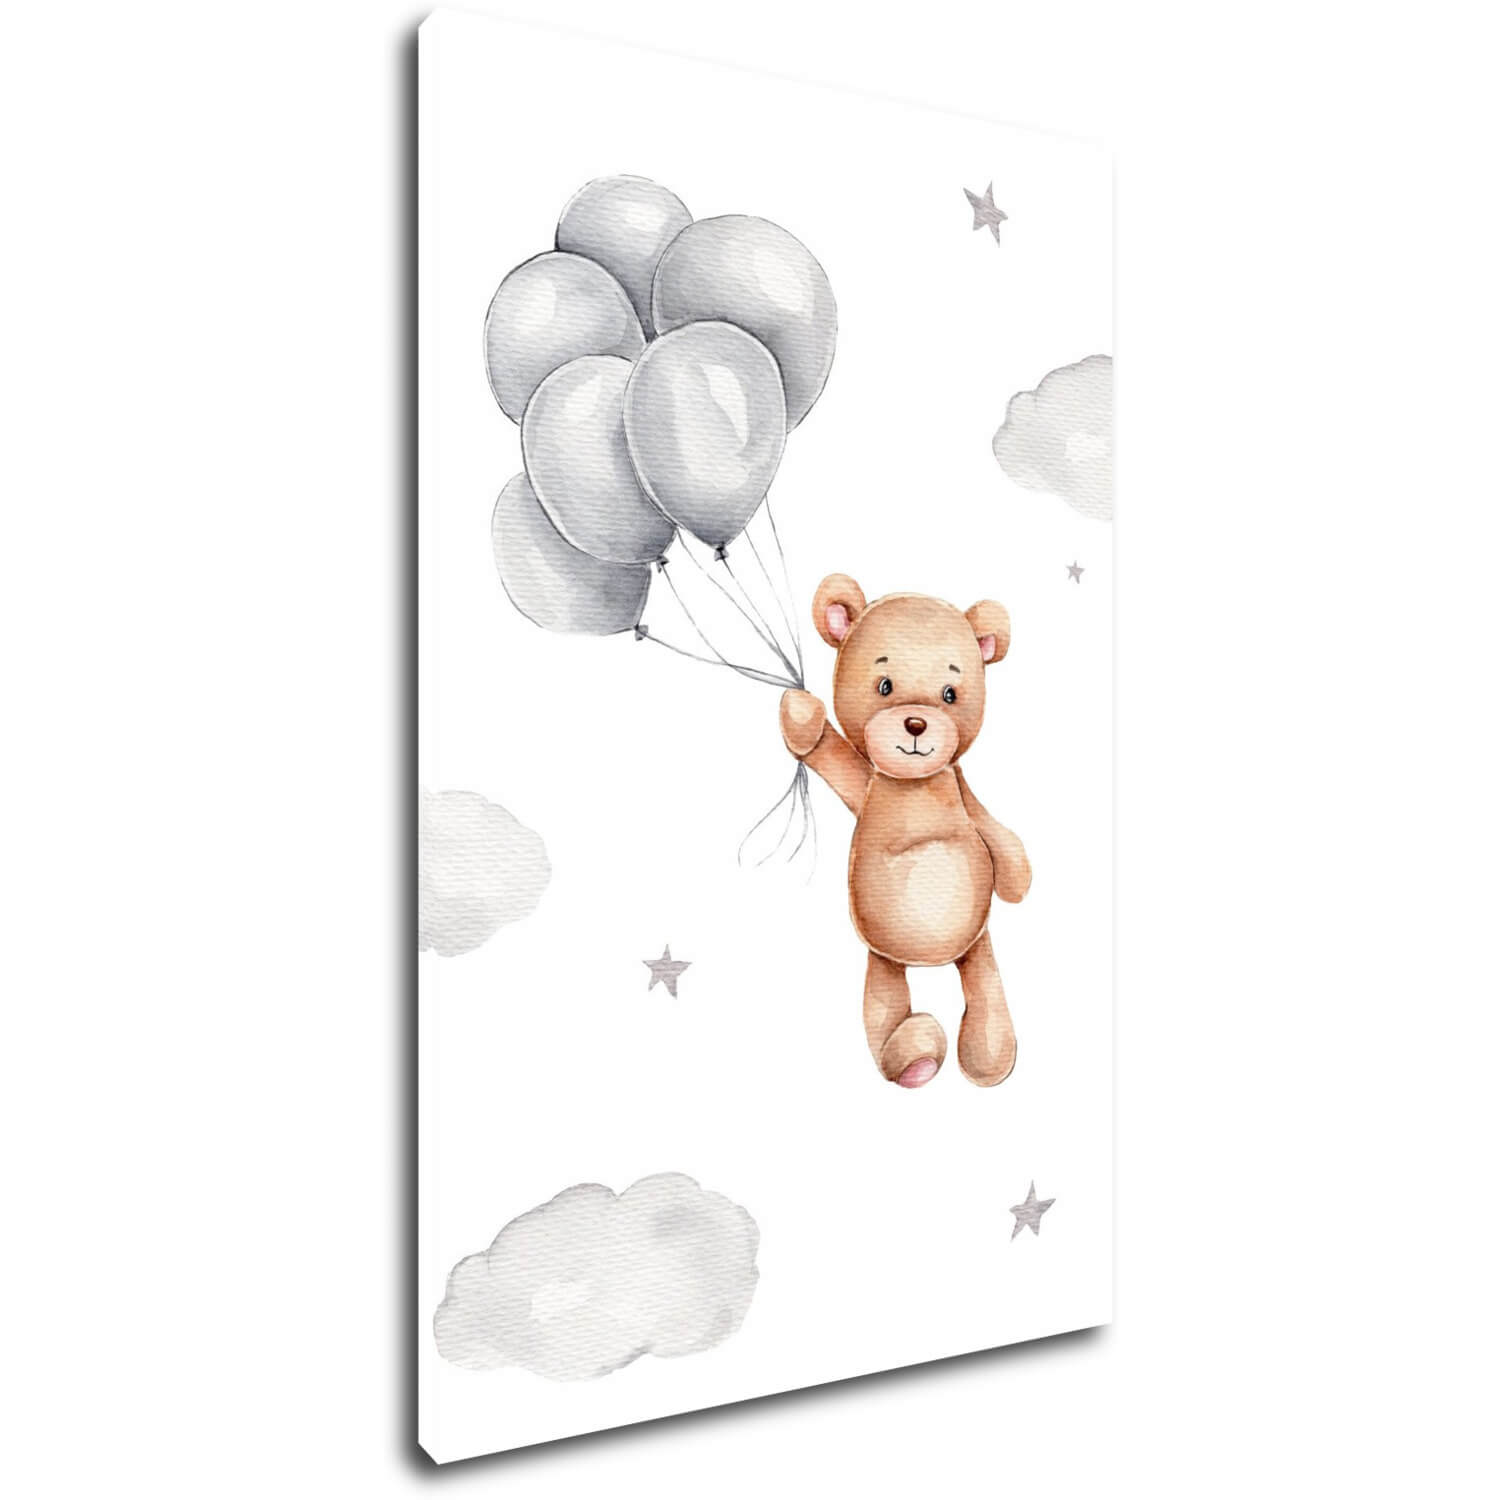 Obraz Medvedík s balóniky - 20 x 30 cm